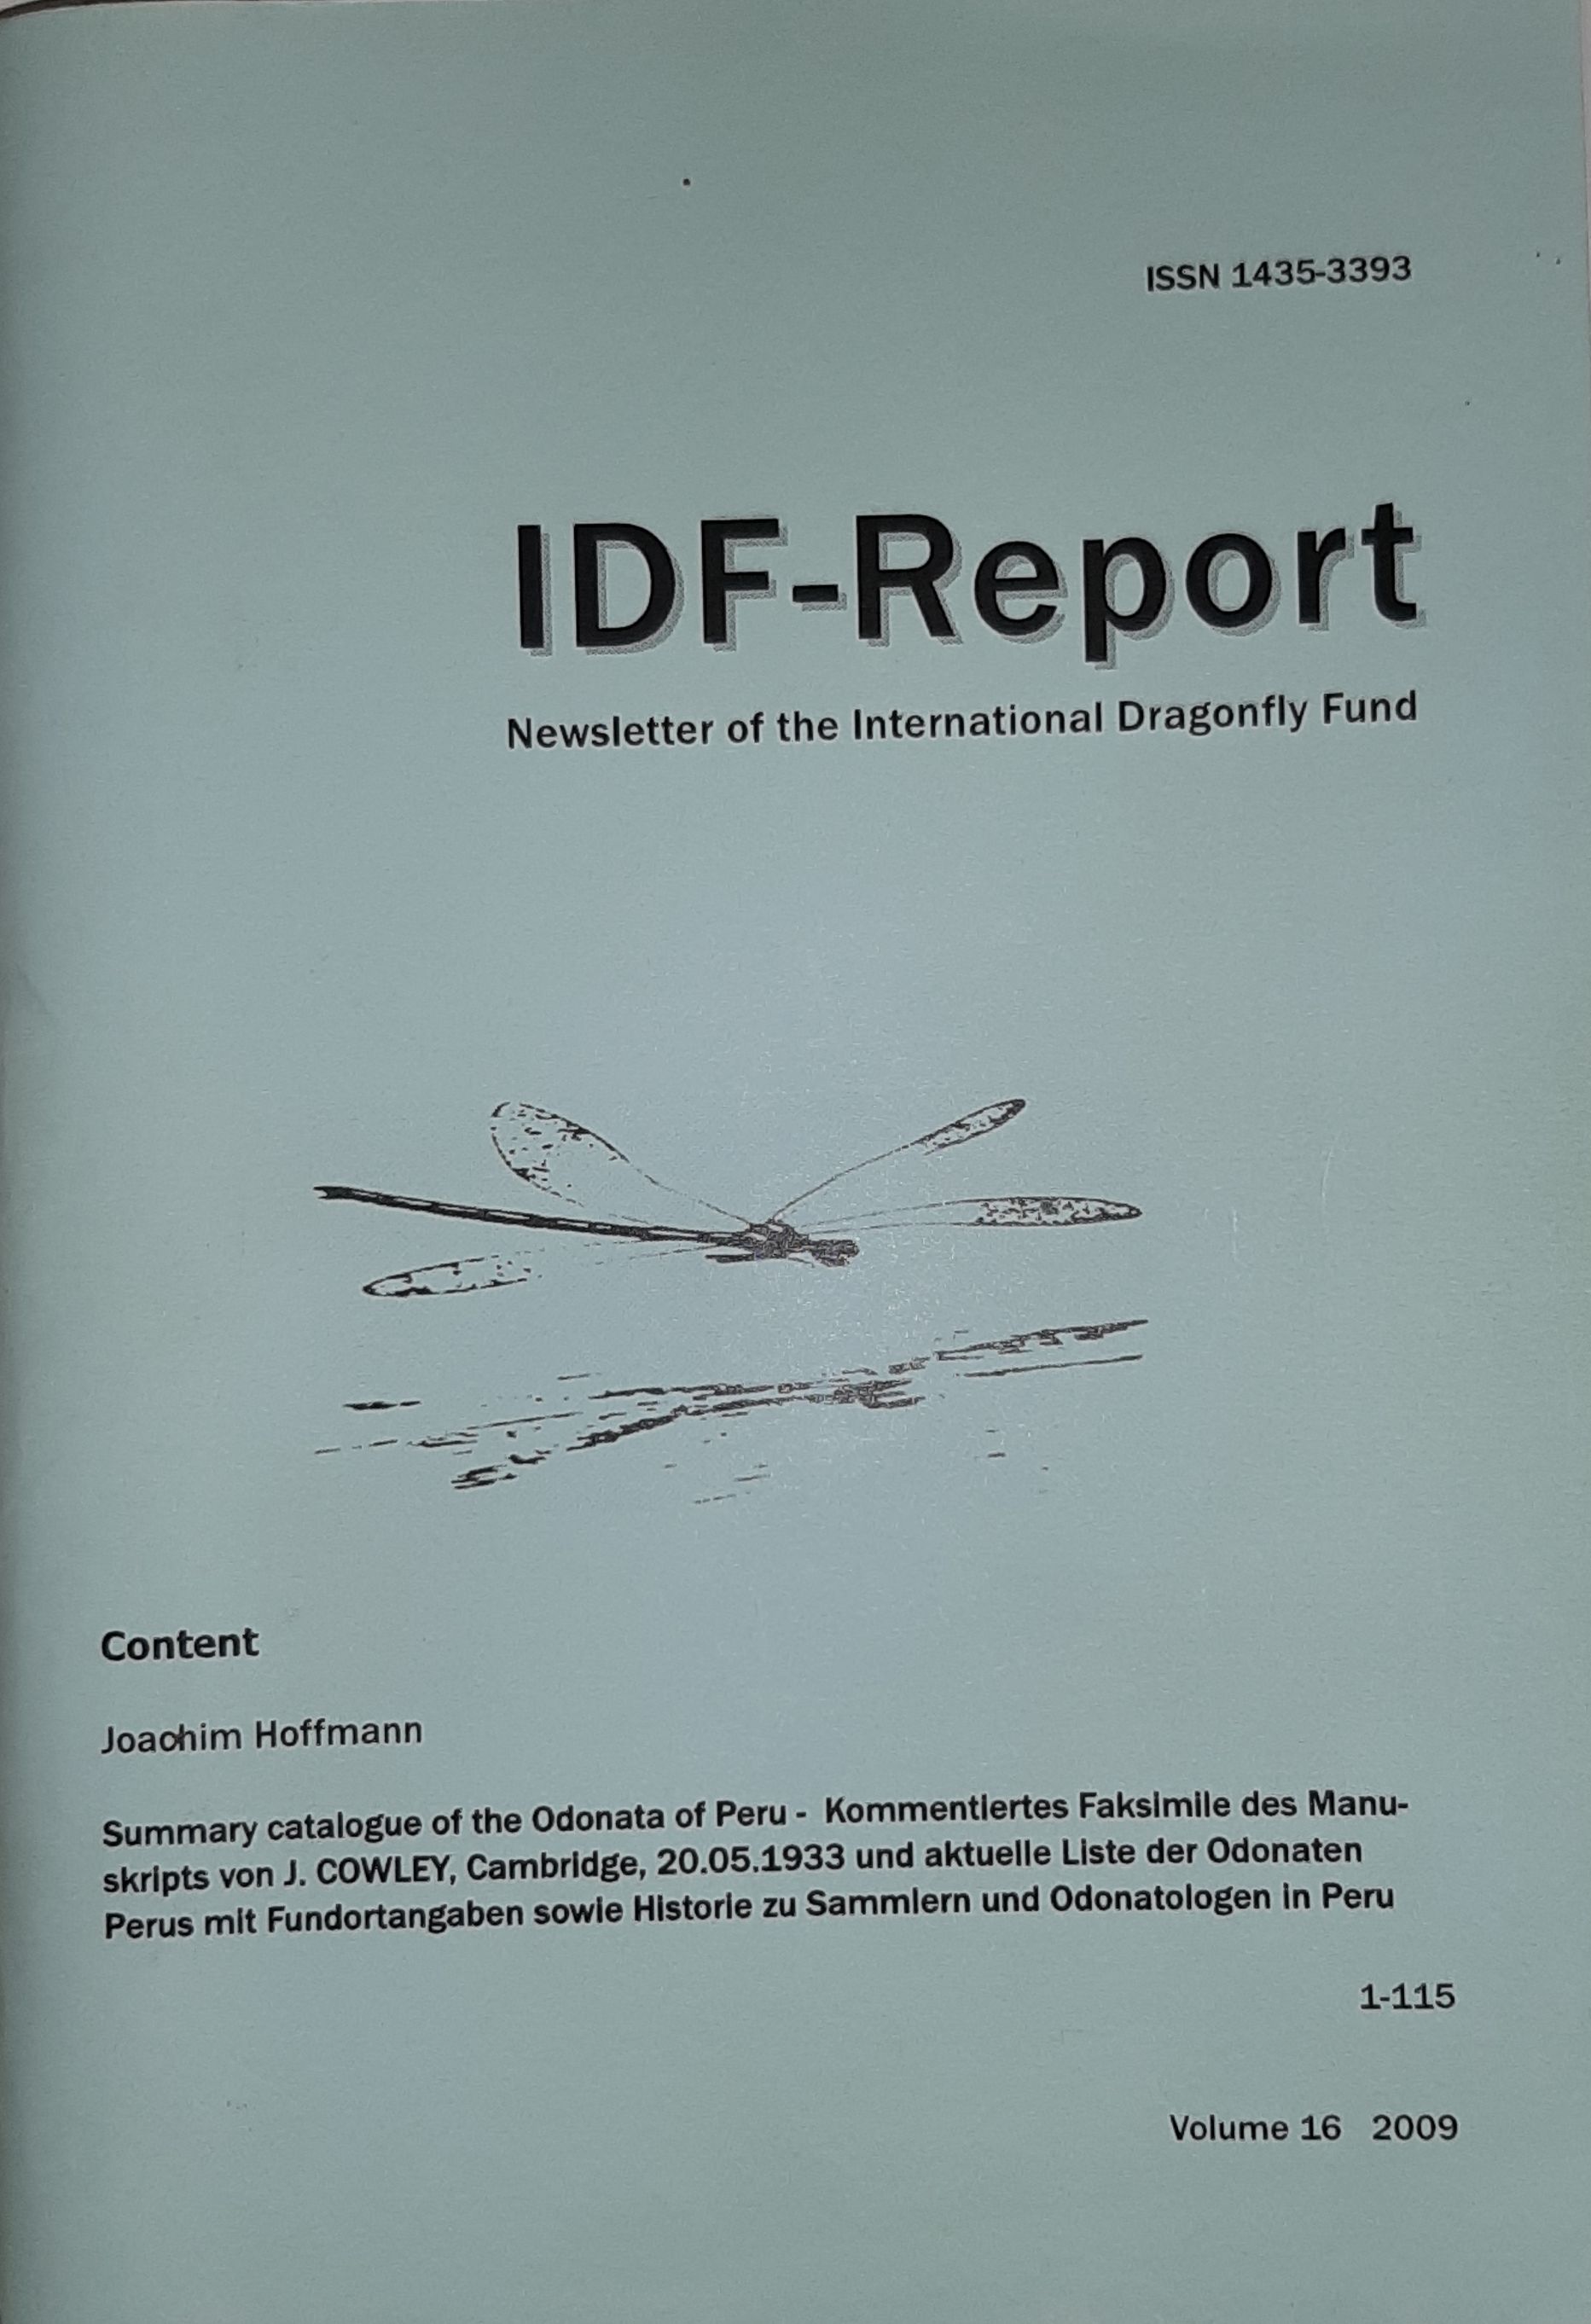 IDF - Report 2009/16. évf. Newsletter of the International Dragonfly Fund (Rippl-Rónai Múzeum RR-F)